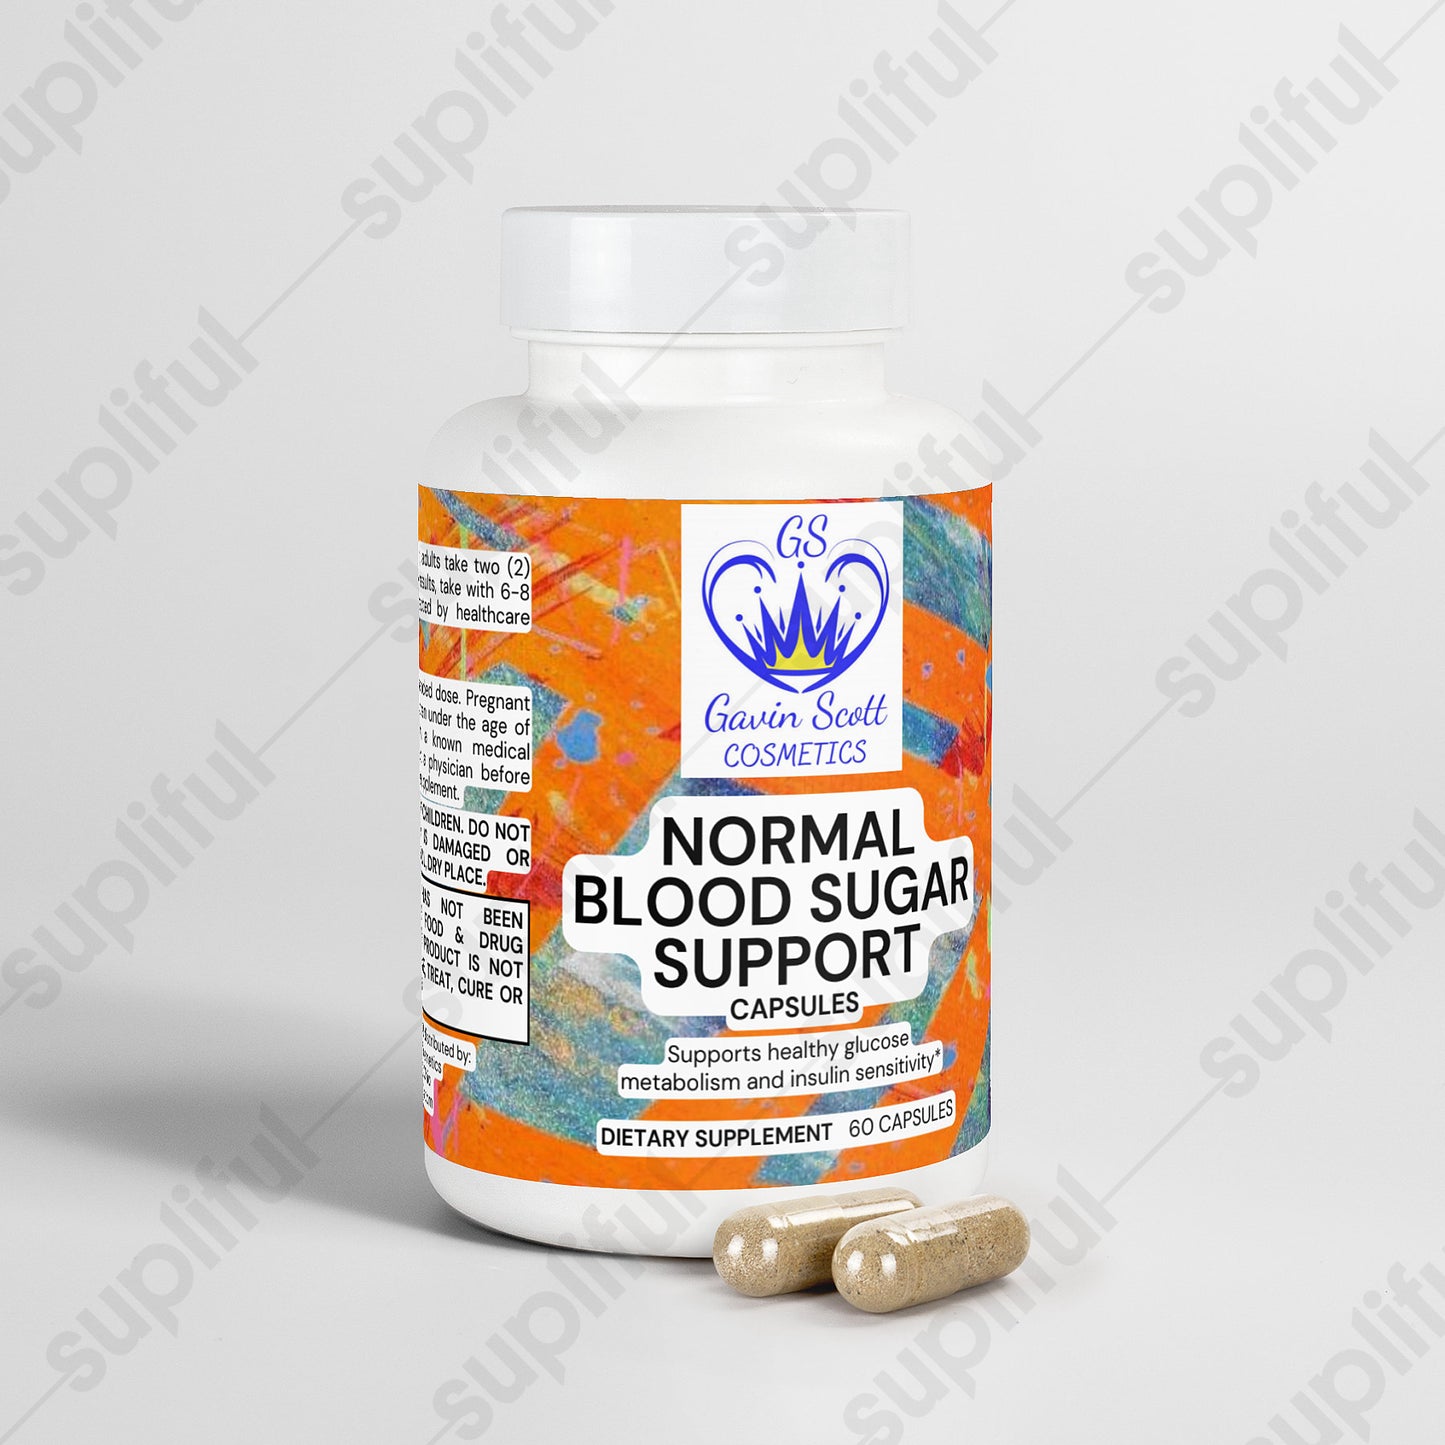 Gavin Scott Cosmetics Normal Blood Sugar Support